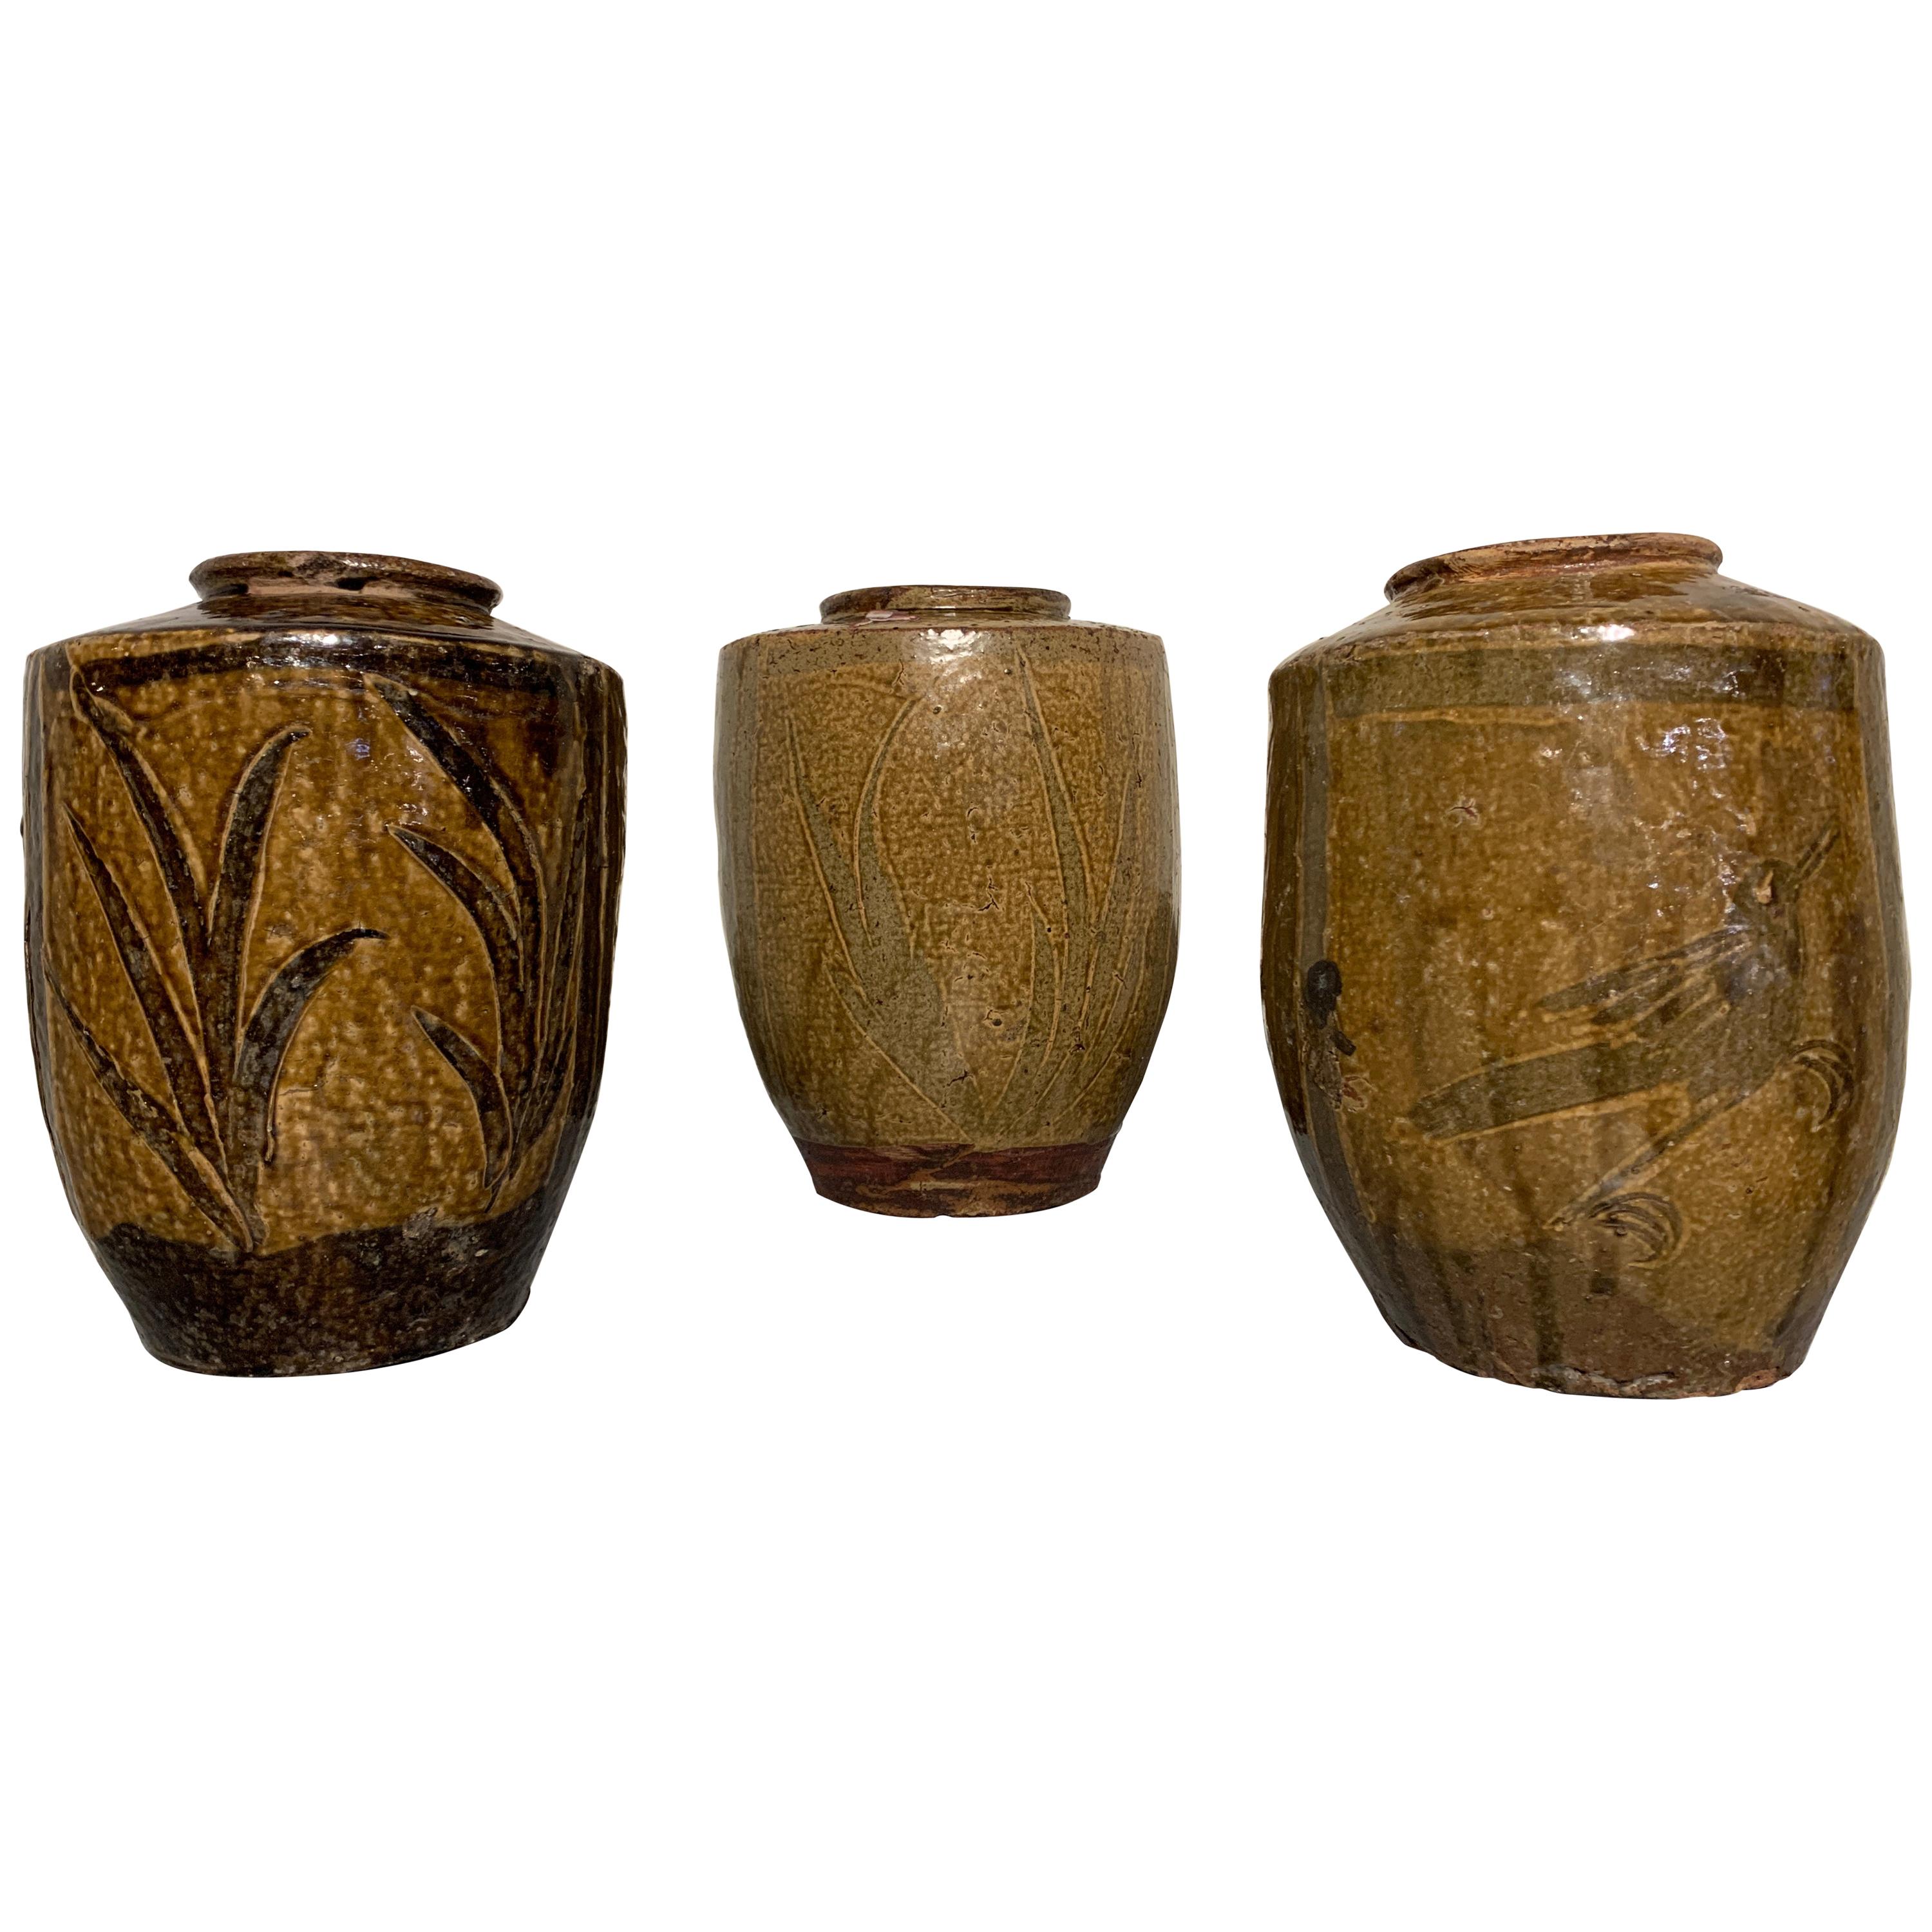 Three Chinese Olive and Brown Glazed Storage Jars, Late 19th Century